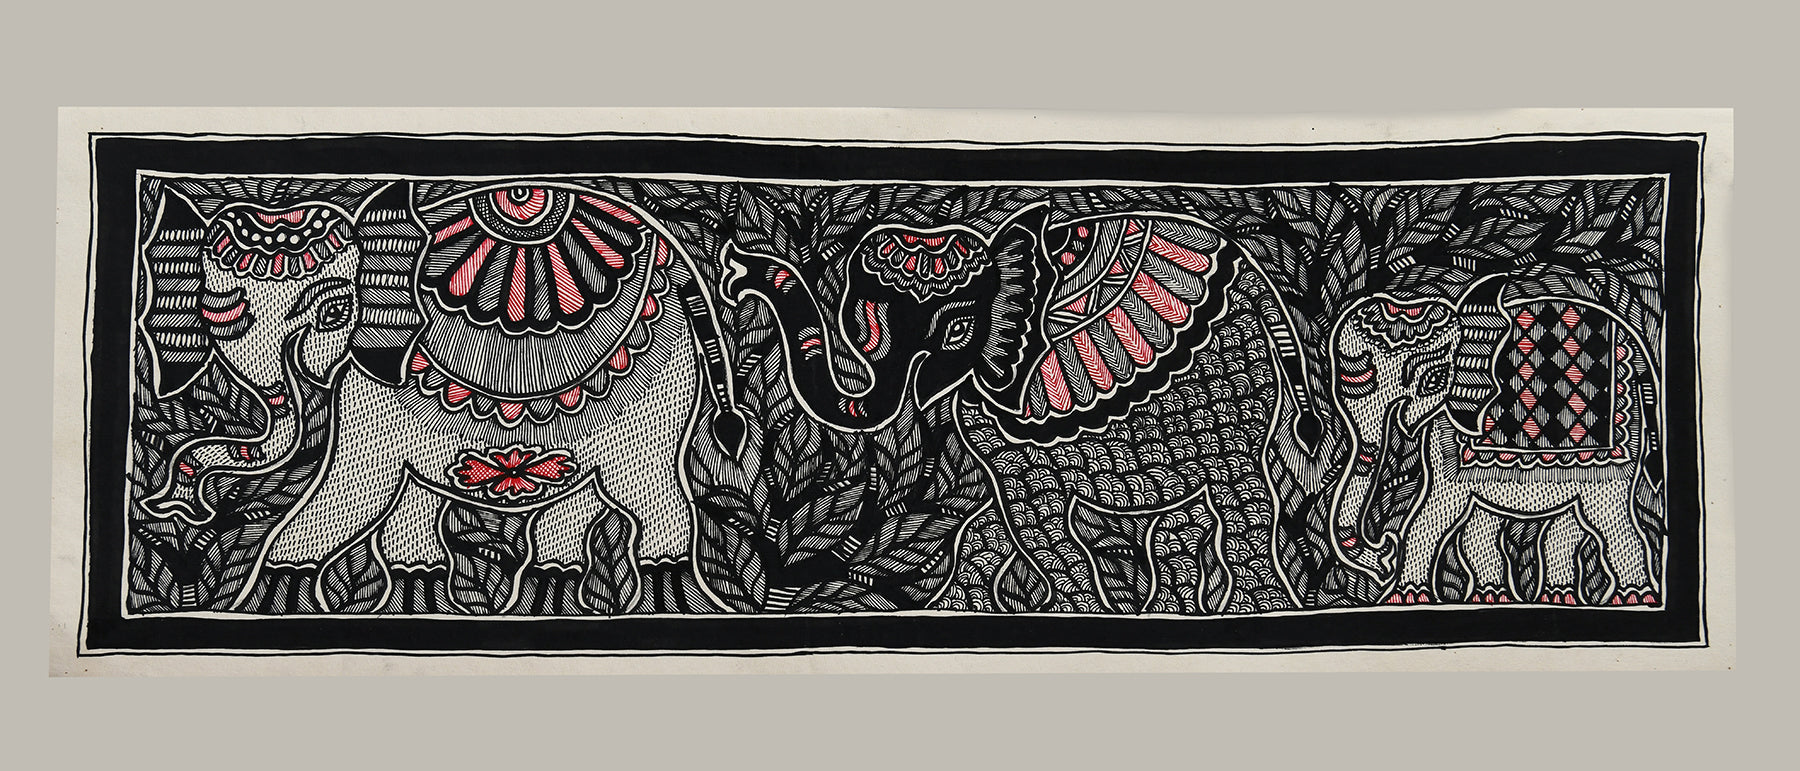 Godna painting "Elephants" by Ranjit Paswan